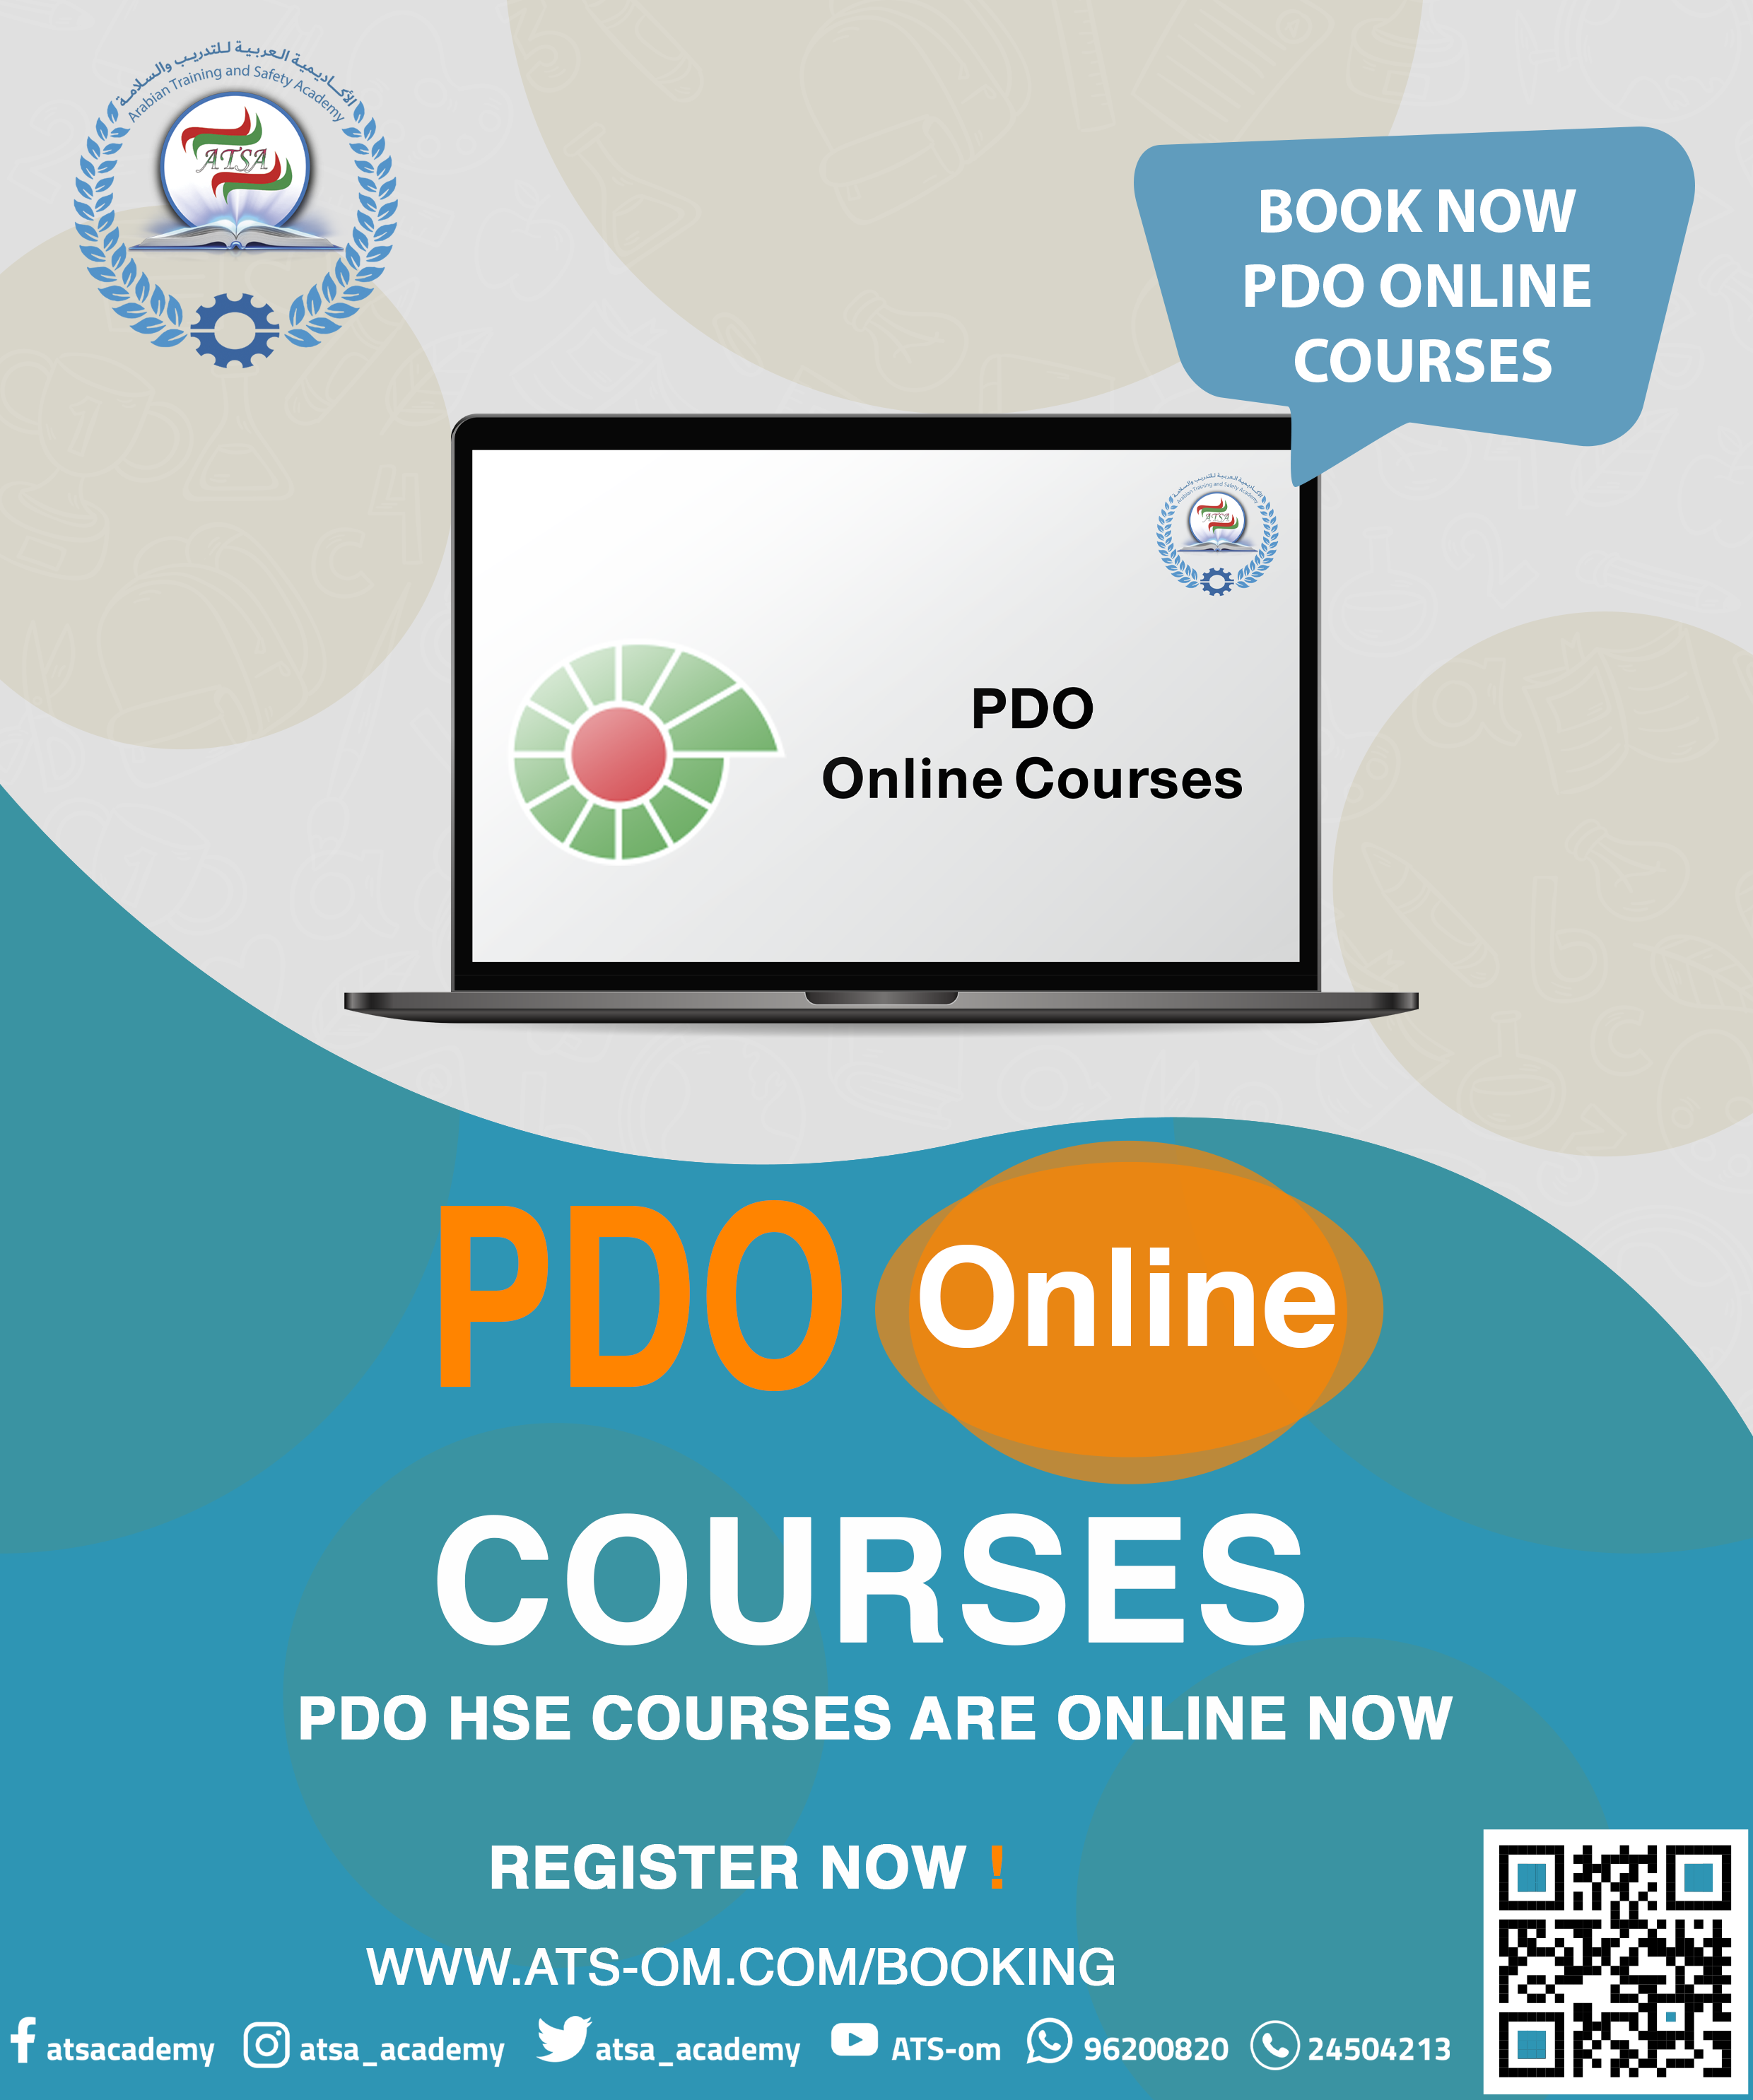 PDO Online Courses